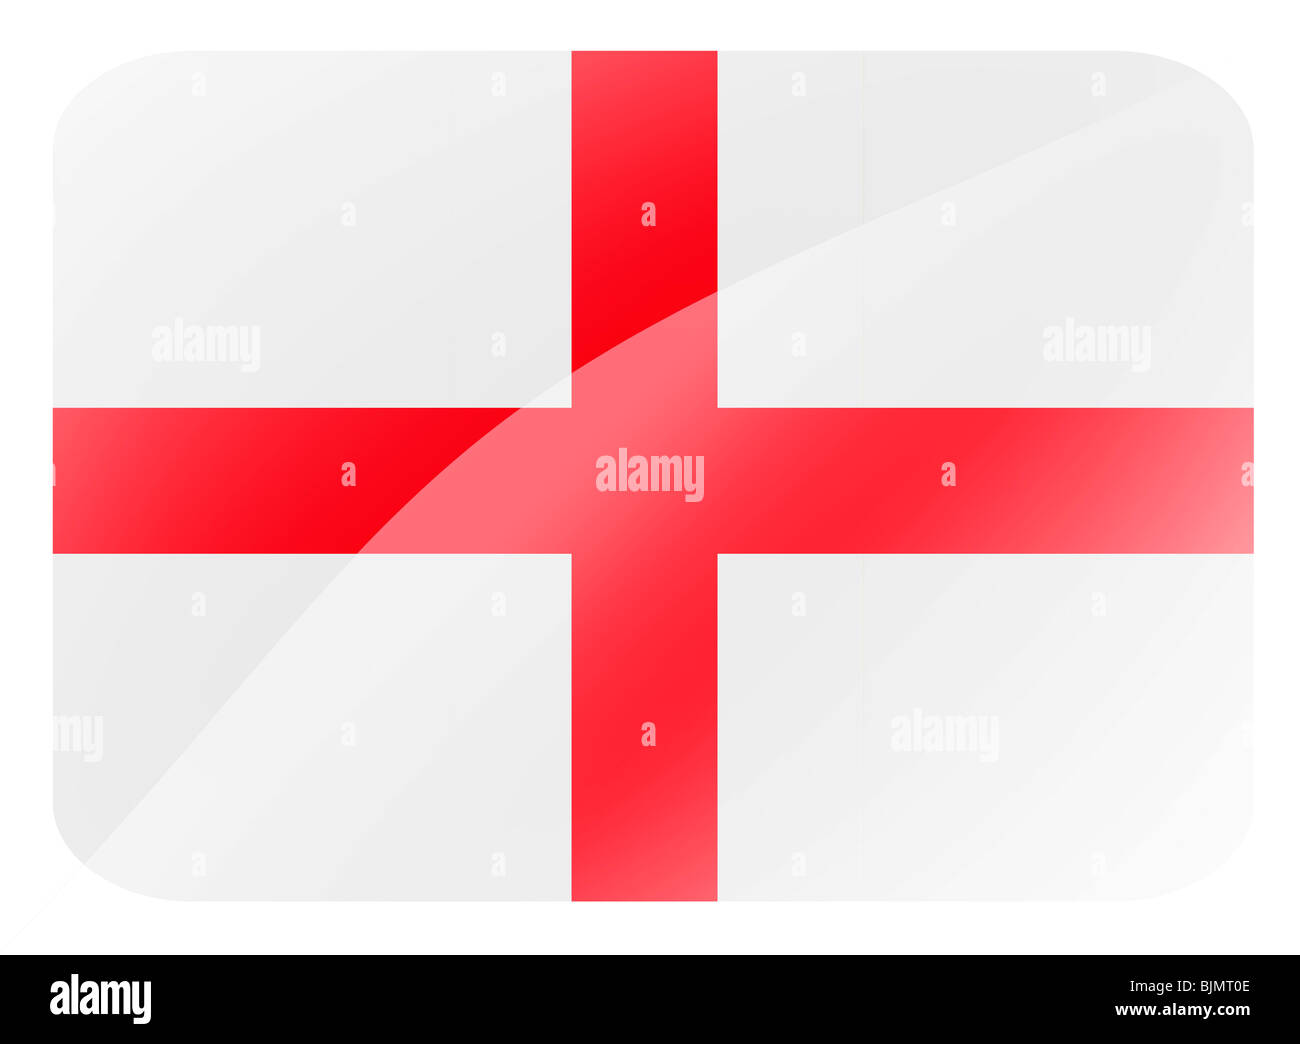 England flag Stock Photo